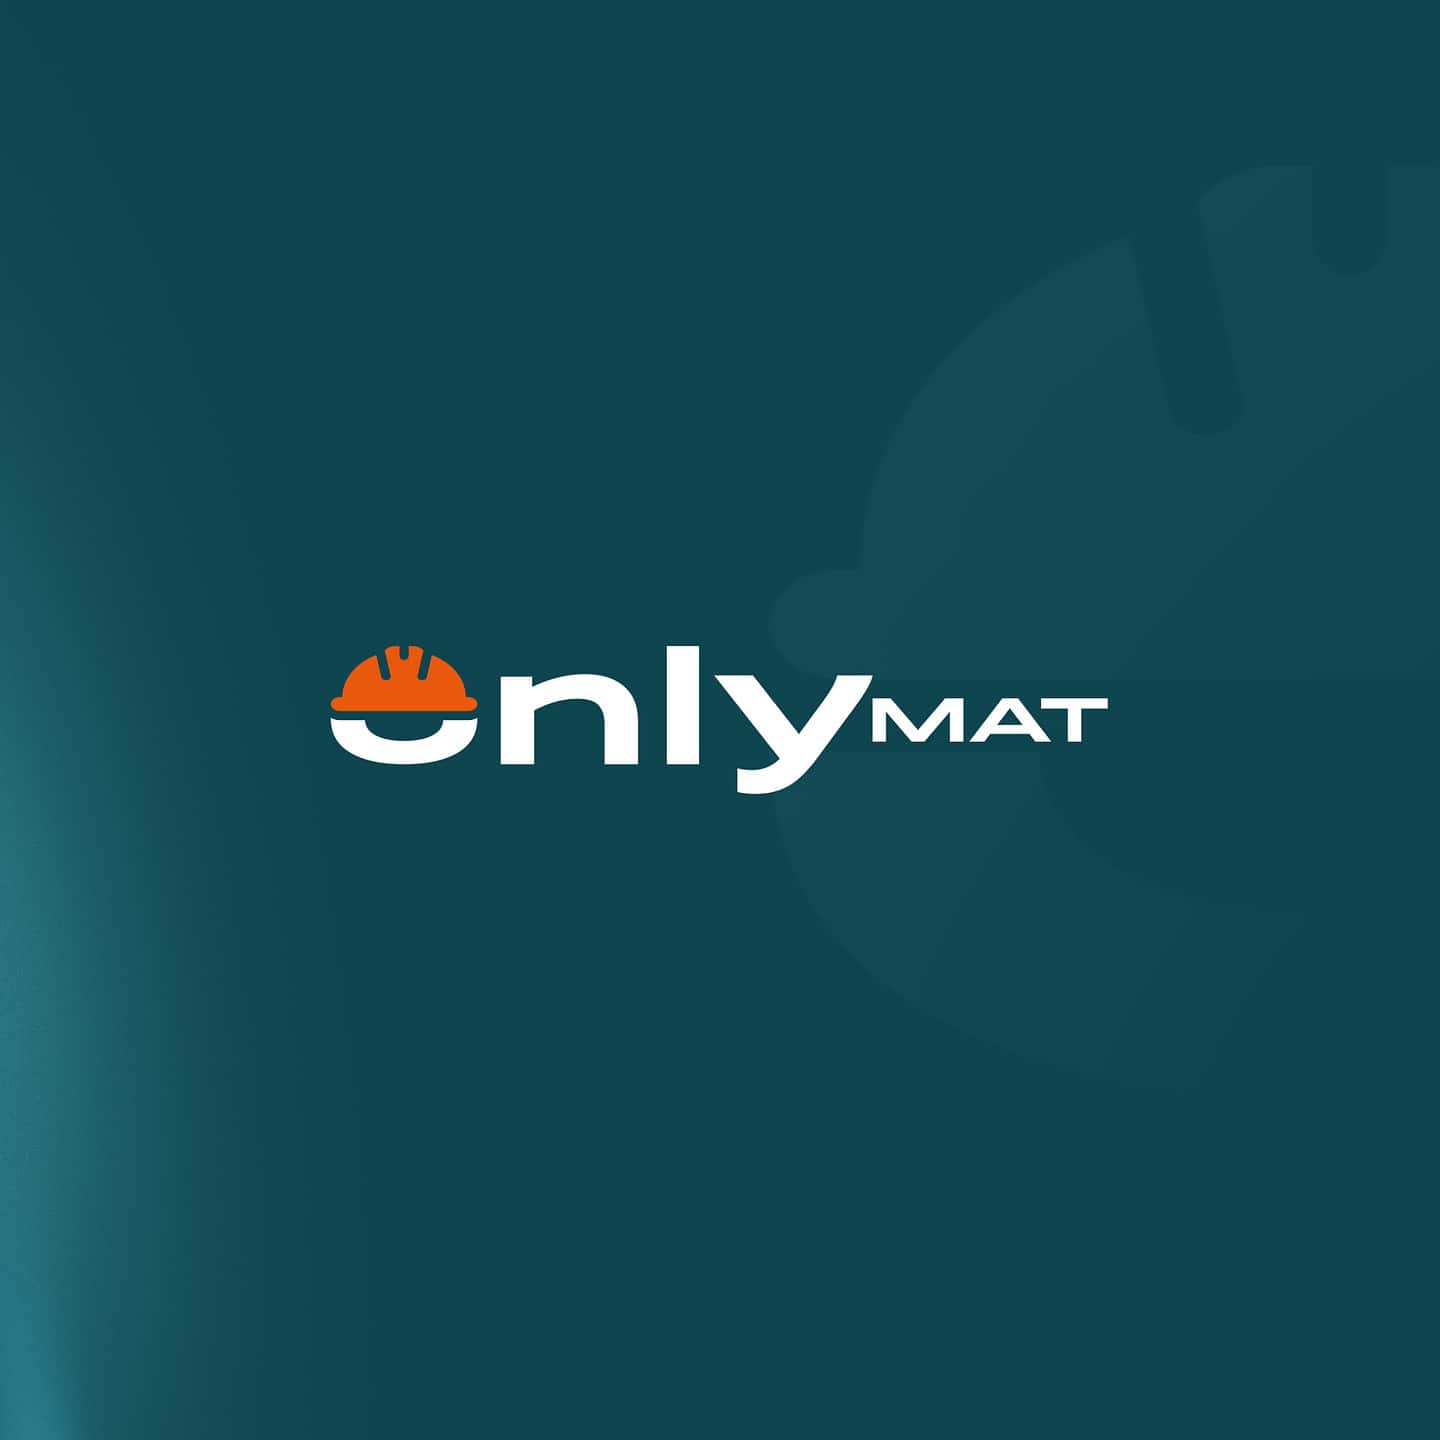 OnlyMat logo